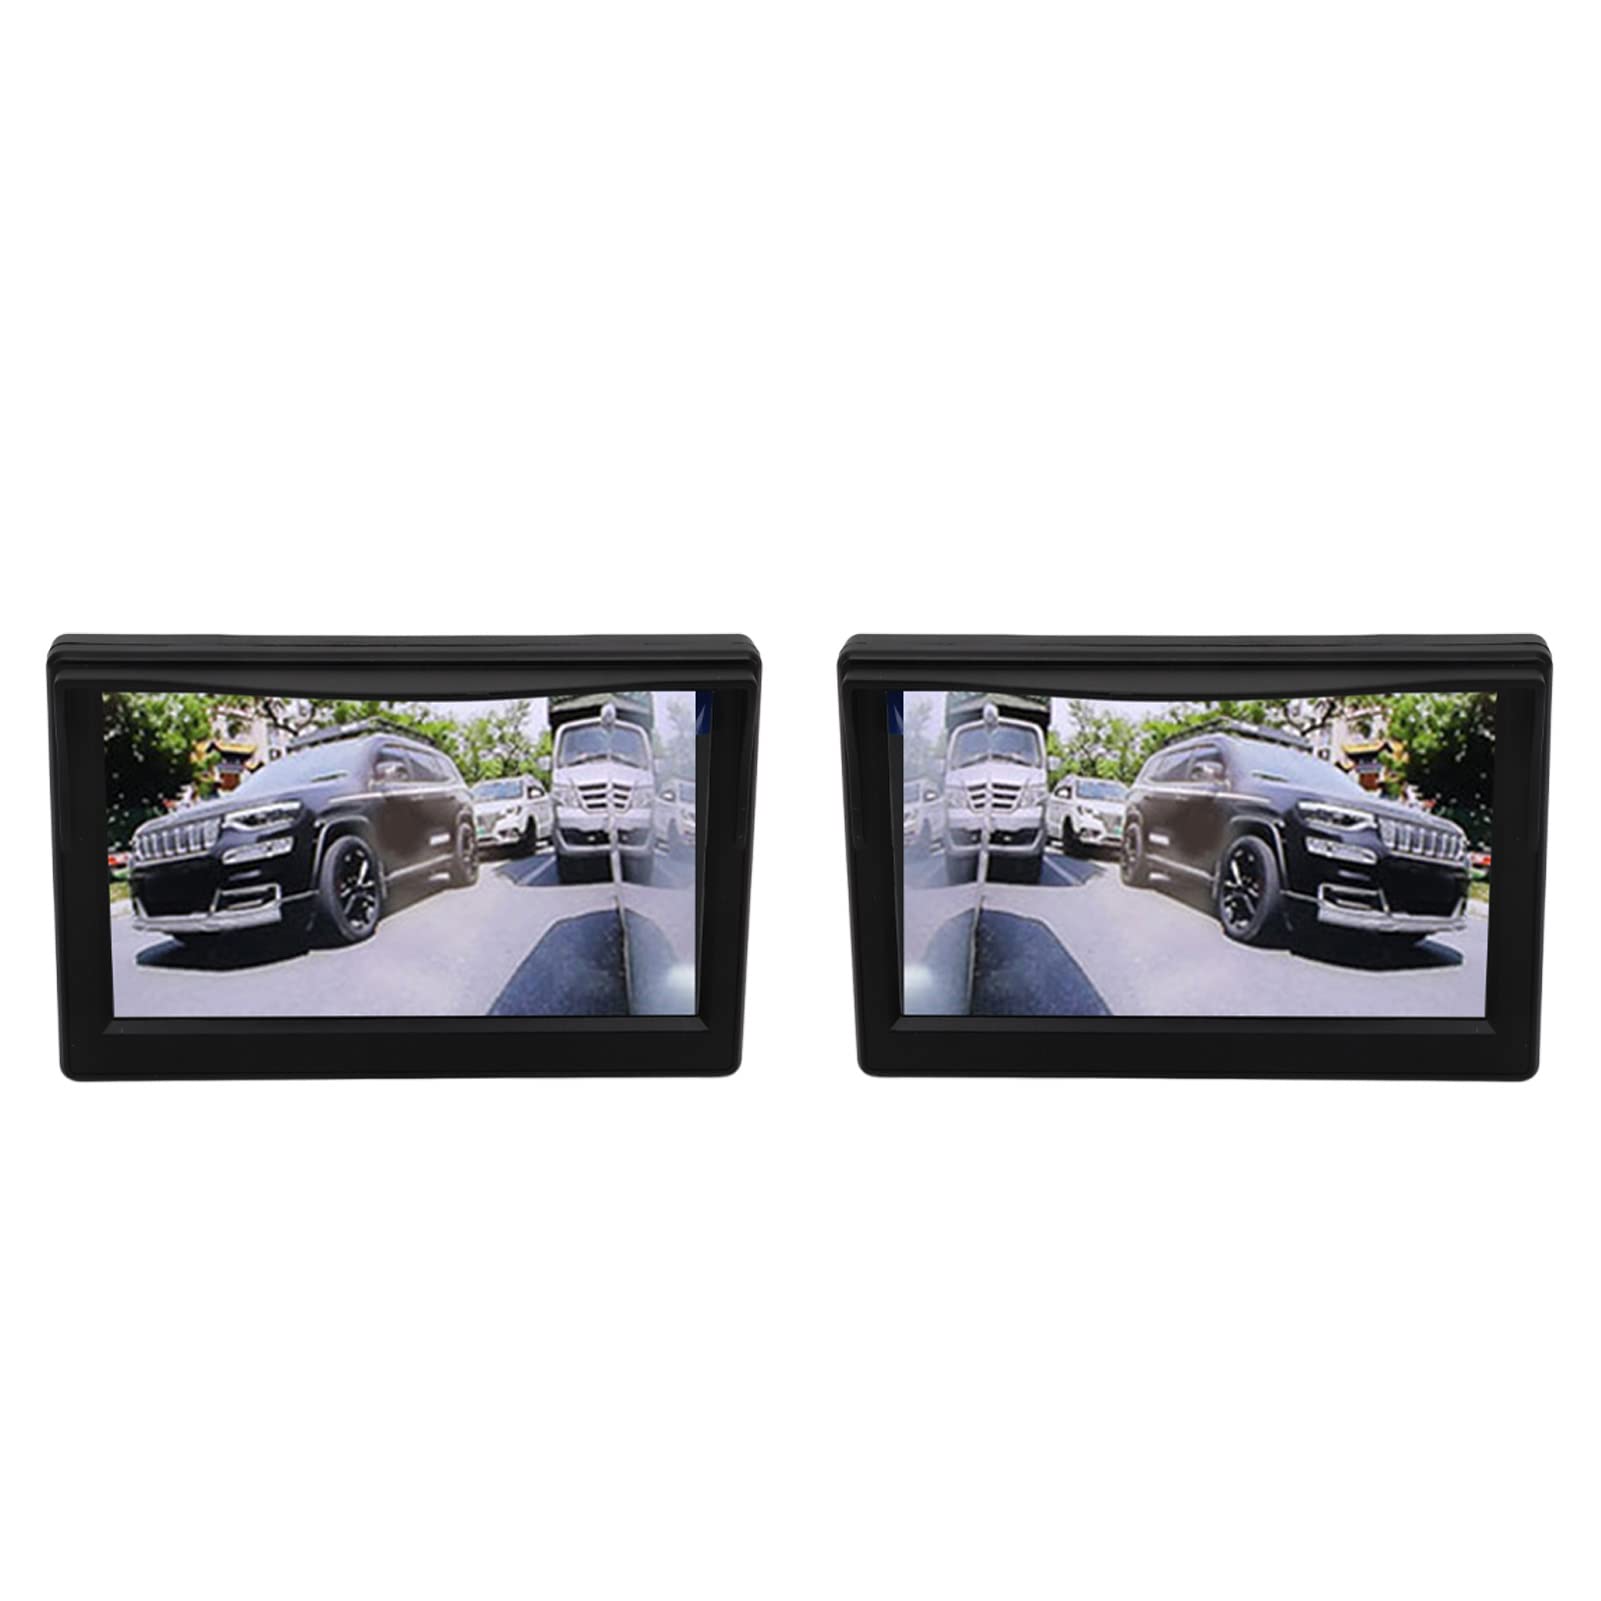 Side View Camera System Kit, View Car Camera Monitor Screen, 5-Zoll-LCD-Monitor, Nachtsicht, IP67, Wasserdichtes Rückfahrkamerasystem von ASHATA